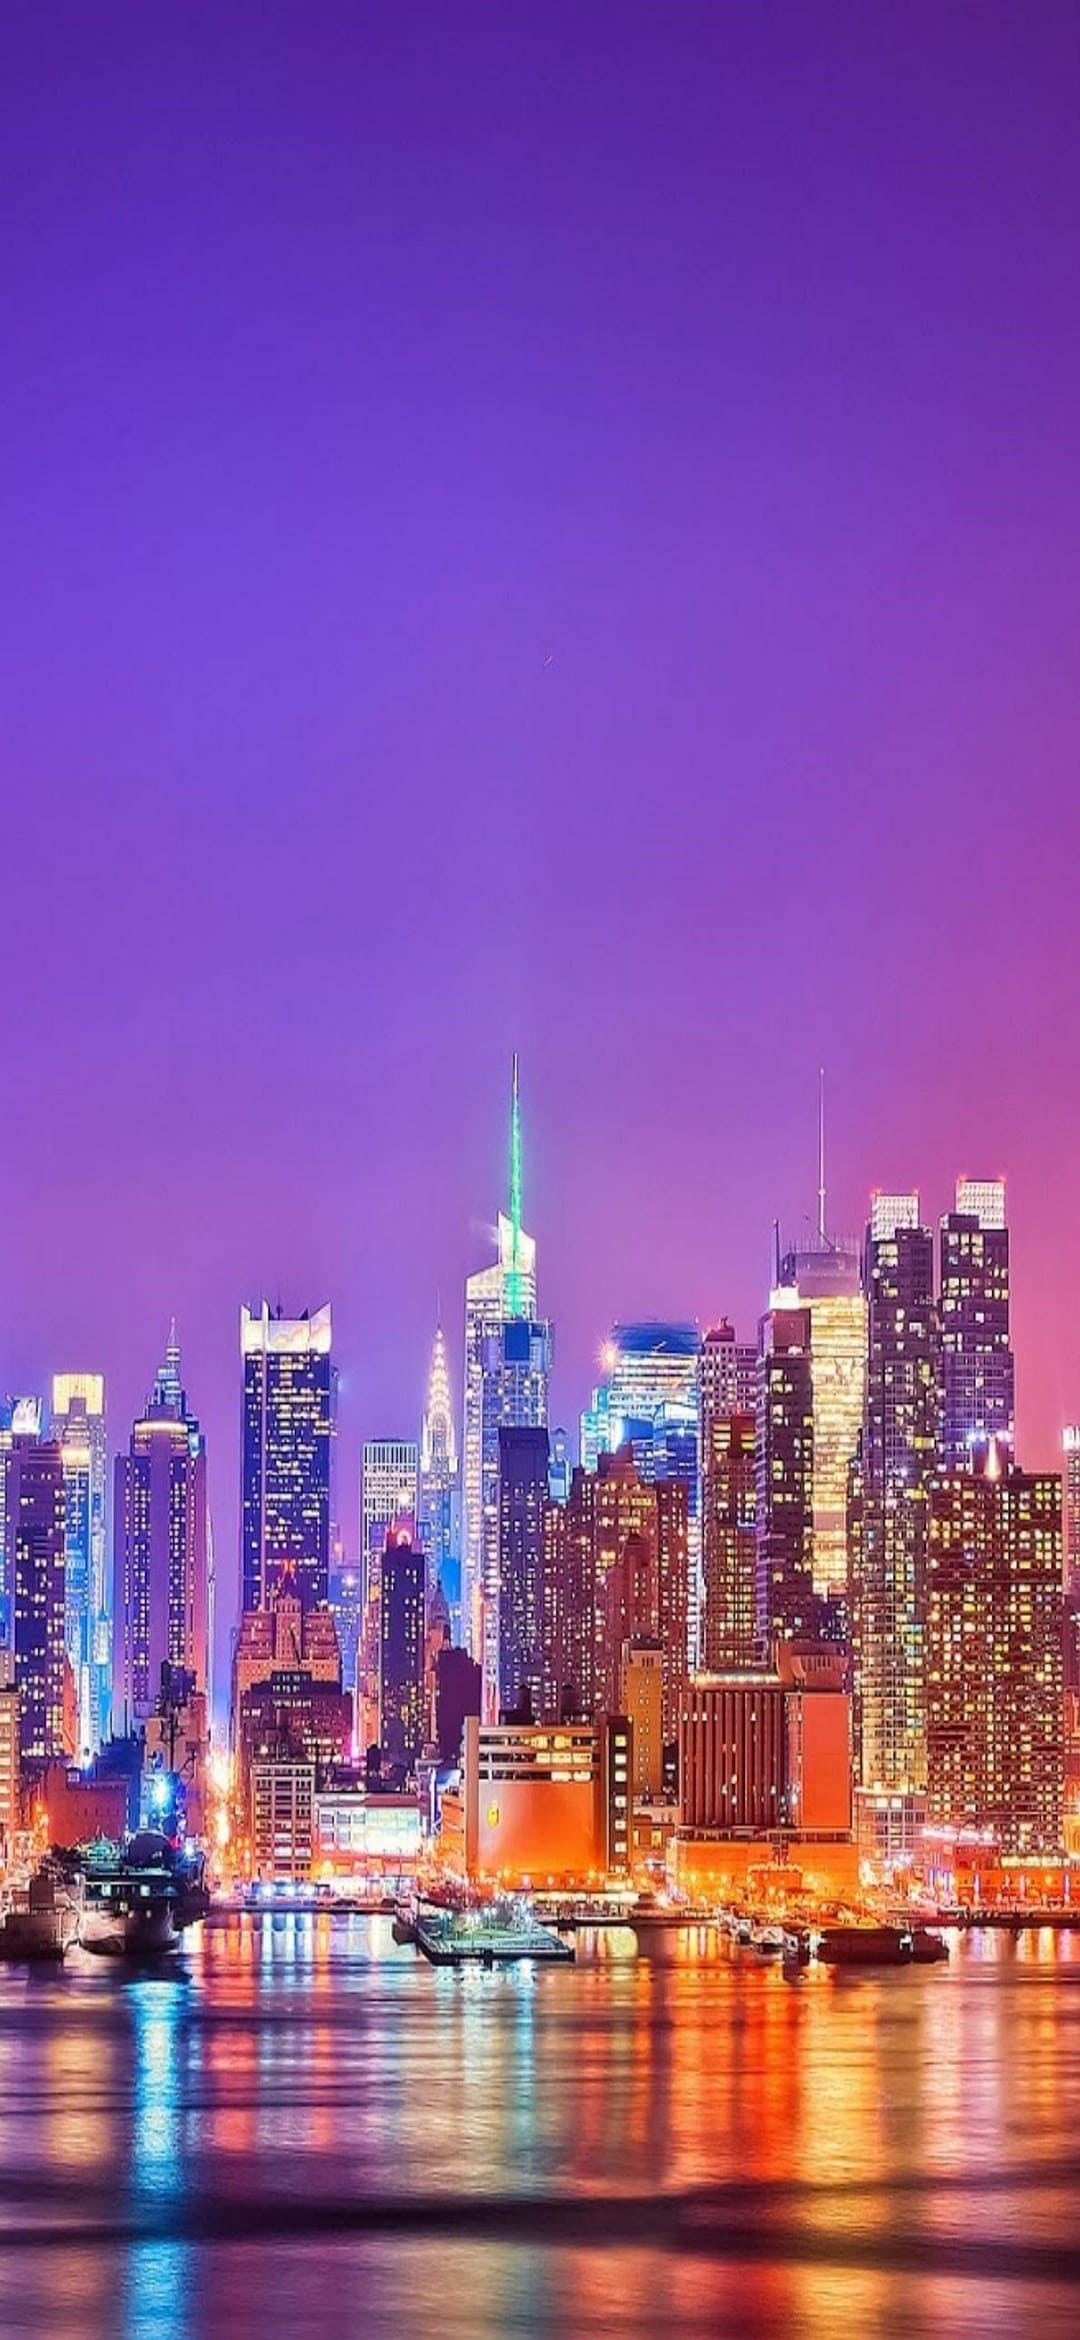 1080x2340 New York Wallpapers Top 65 Best New York Backgrounds Download